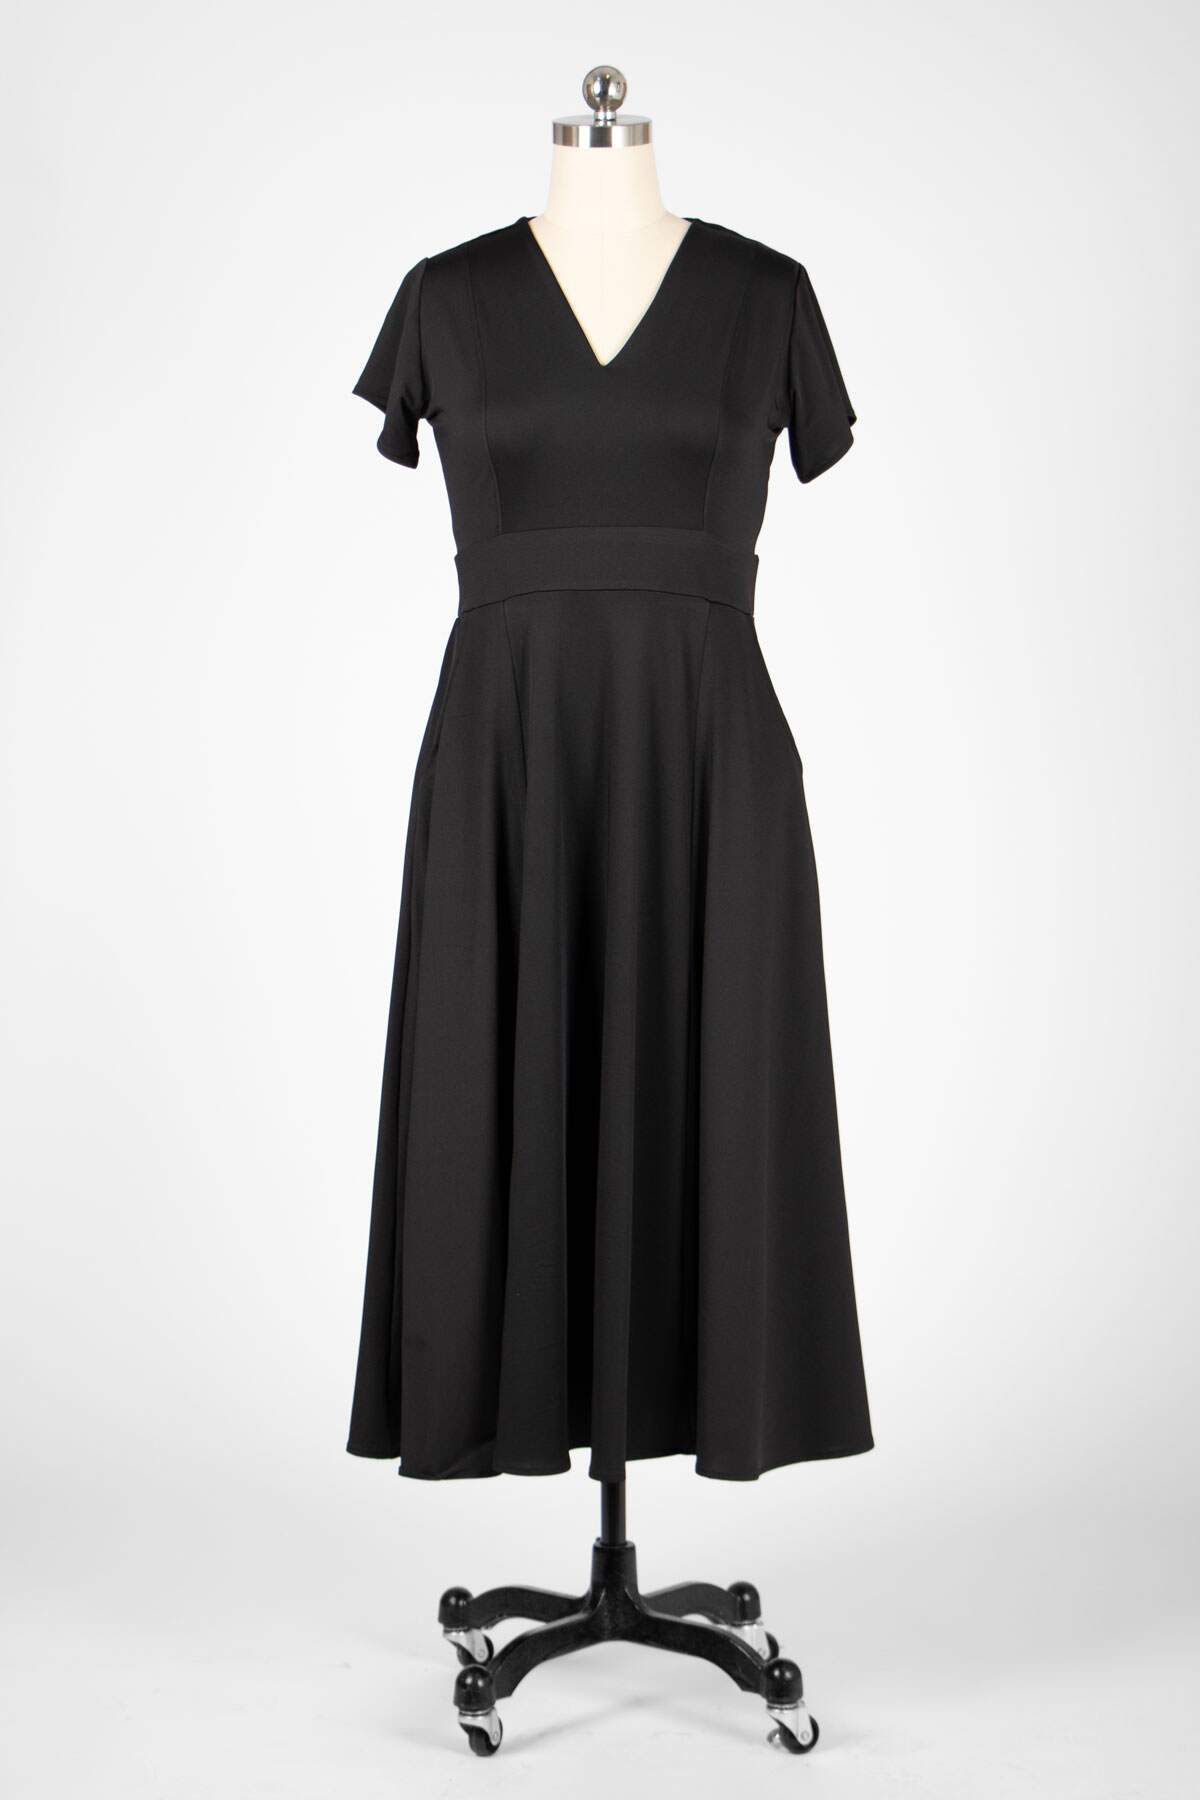 Cecelia Dress - Solid Black